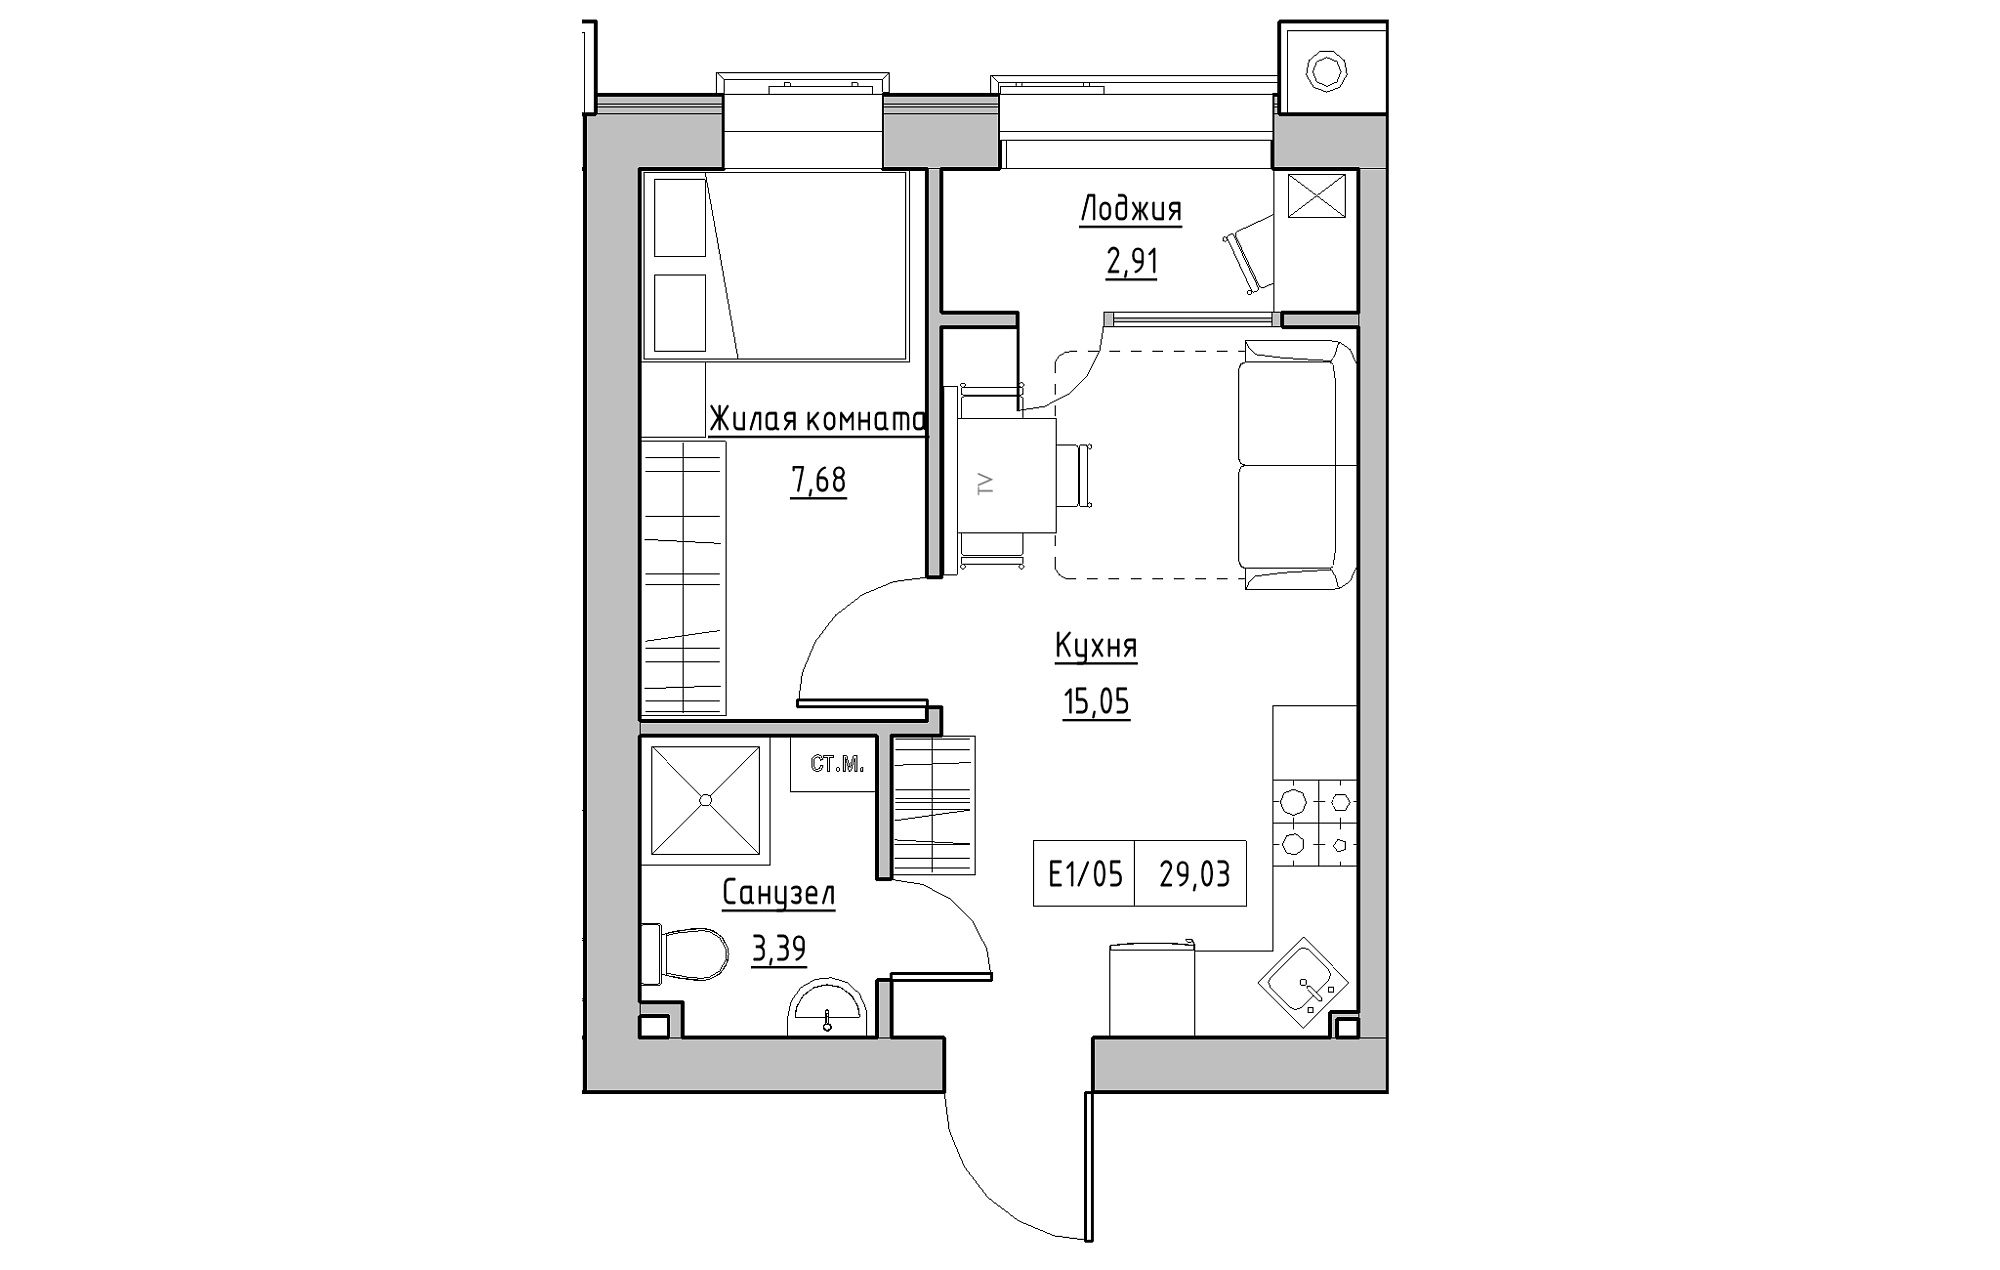 Planning 1-rm flats area 29.03m2, KS-013-03/0007.